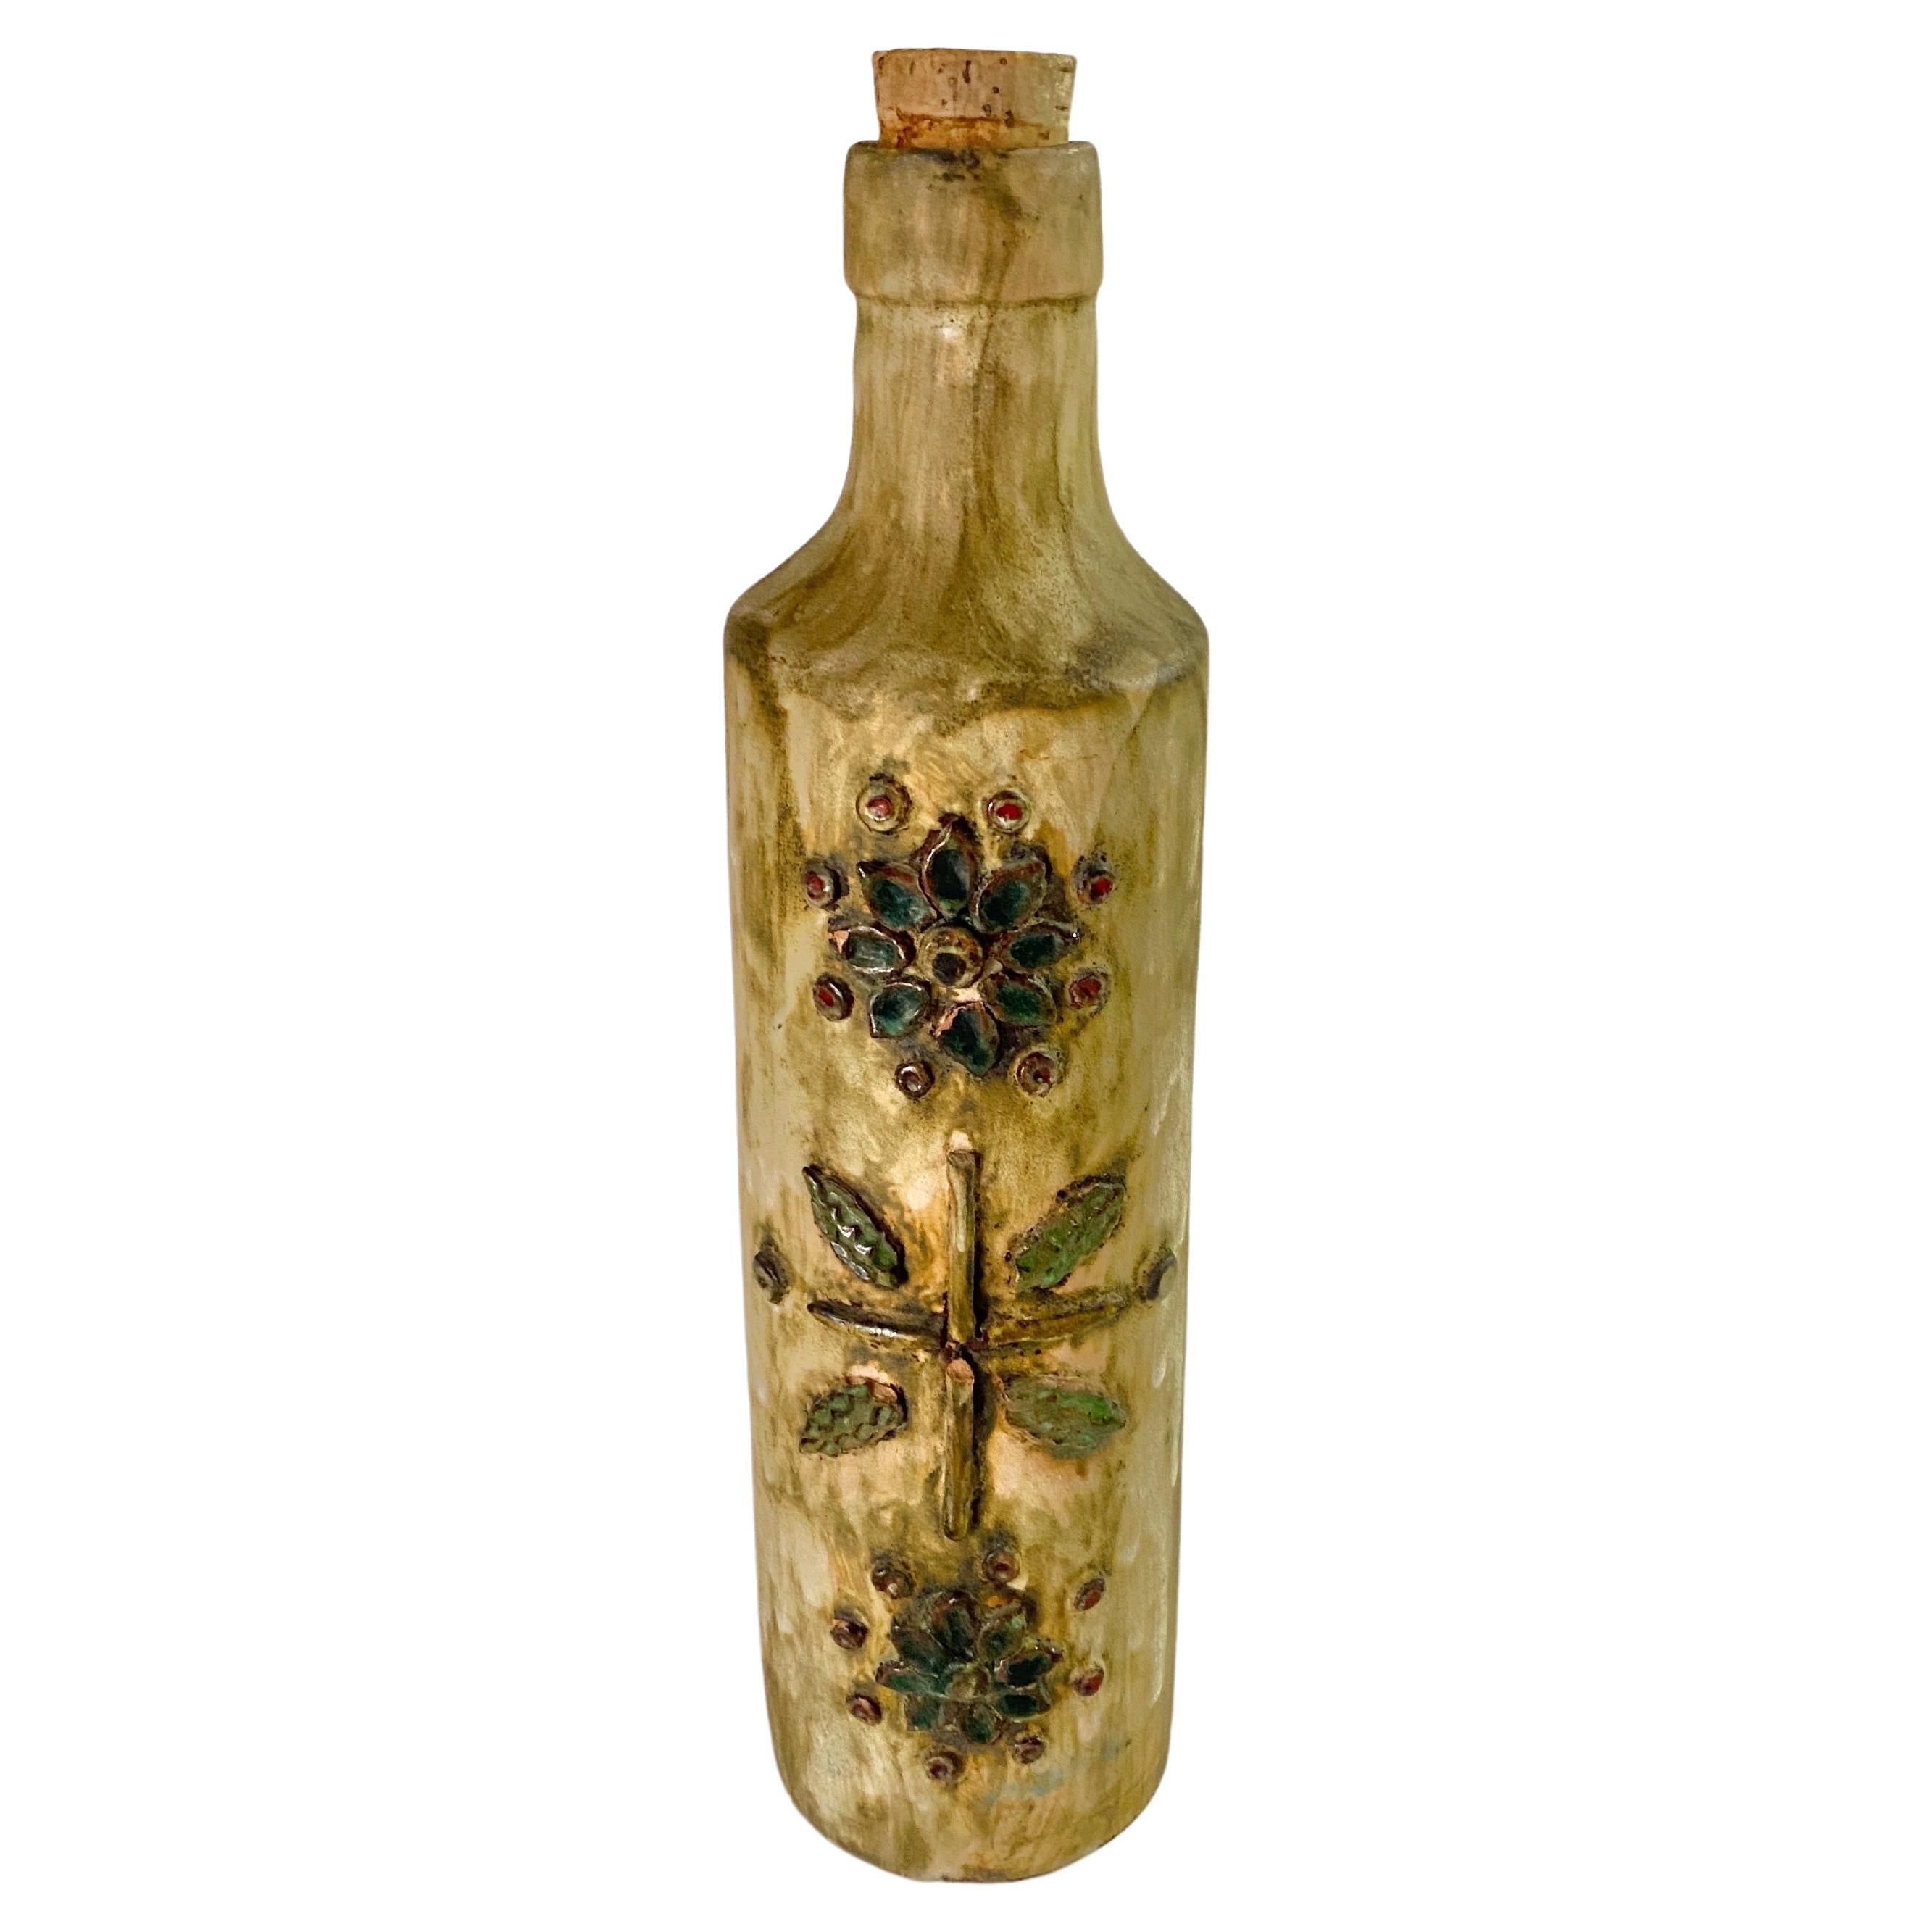 Ceramic Bottle Brown Color, with Flower Decoration Pattern, France, 1960